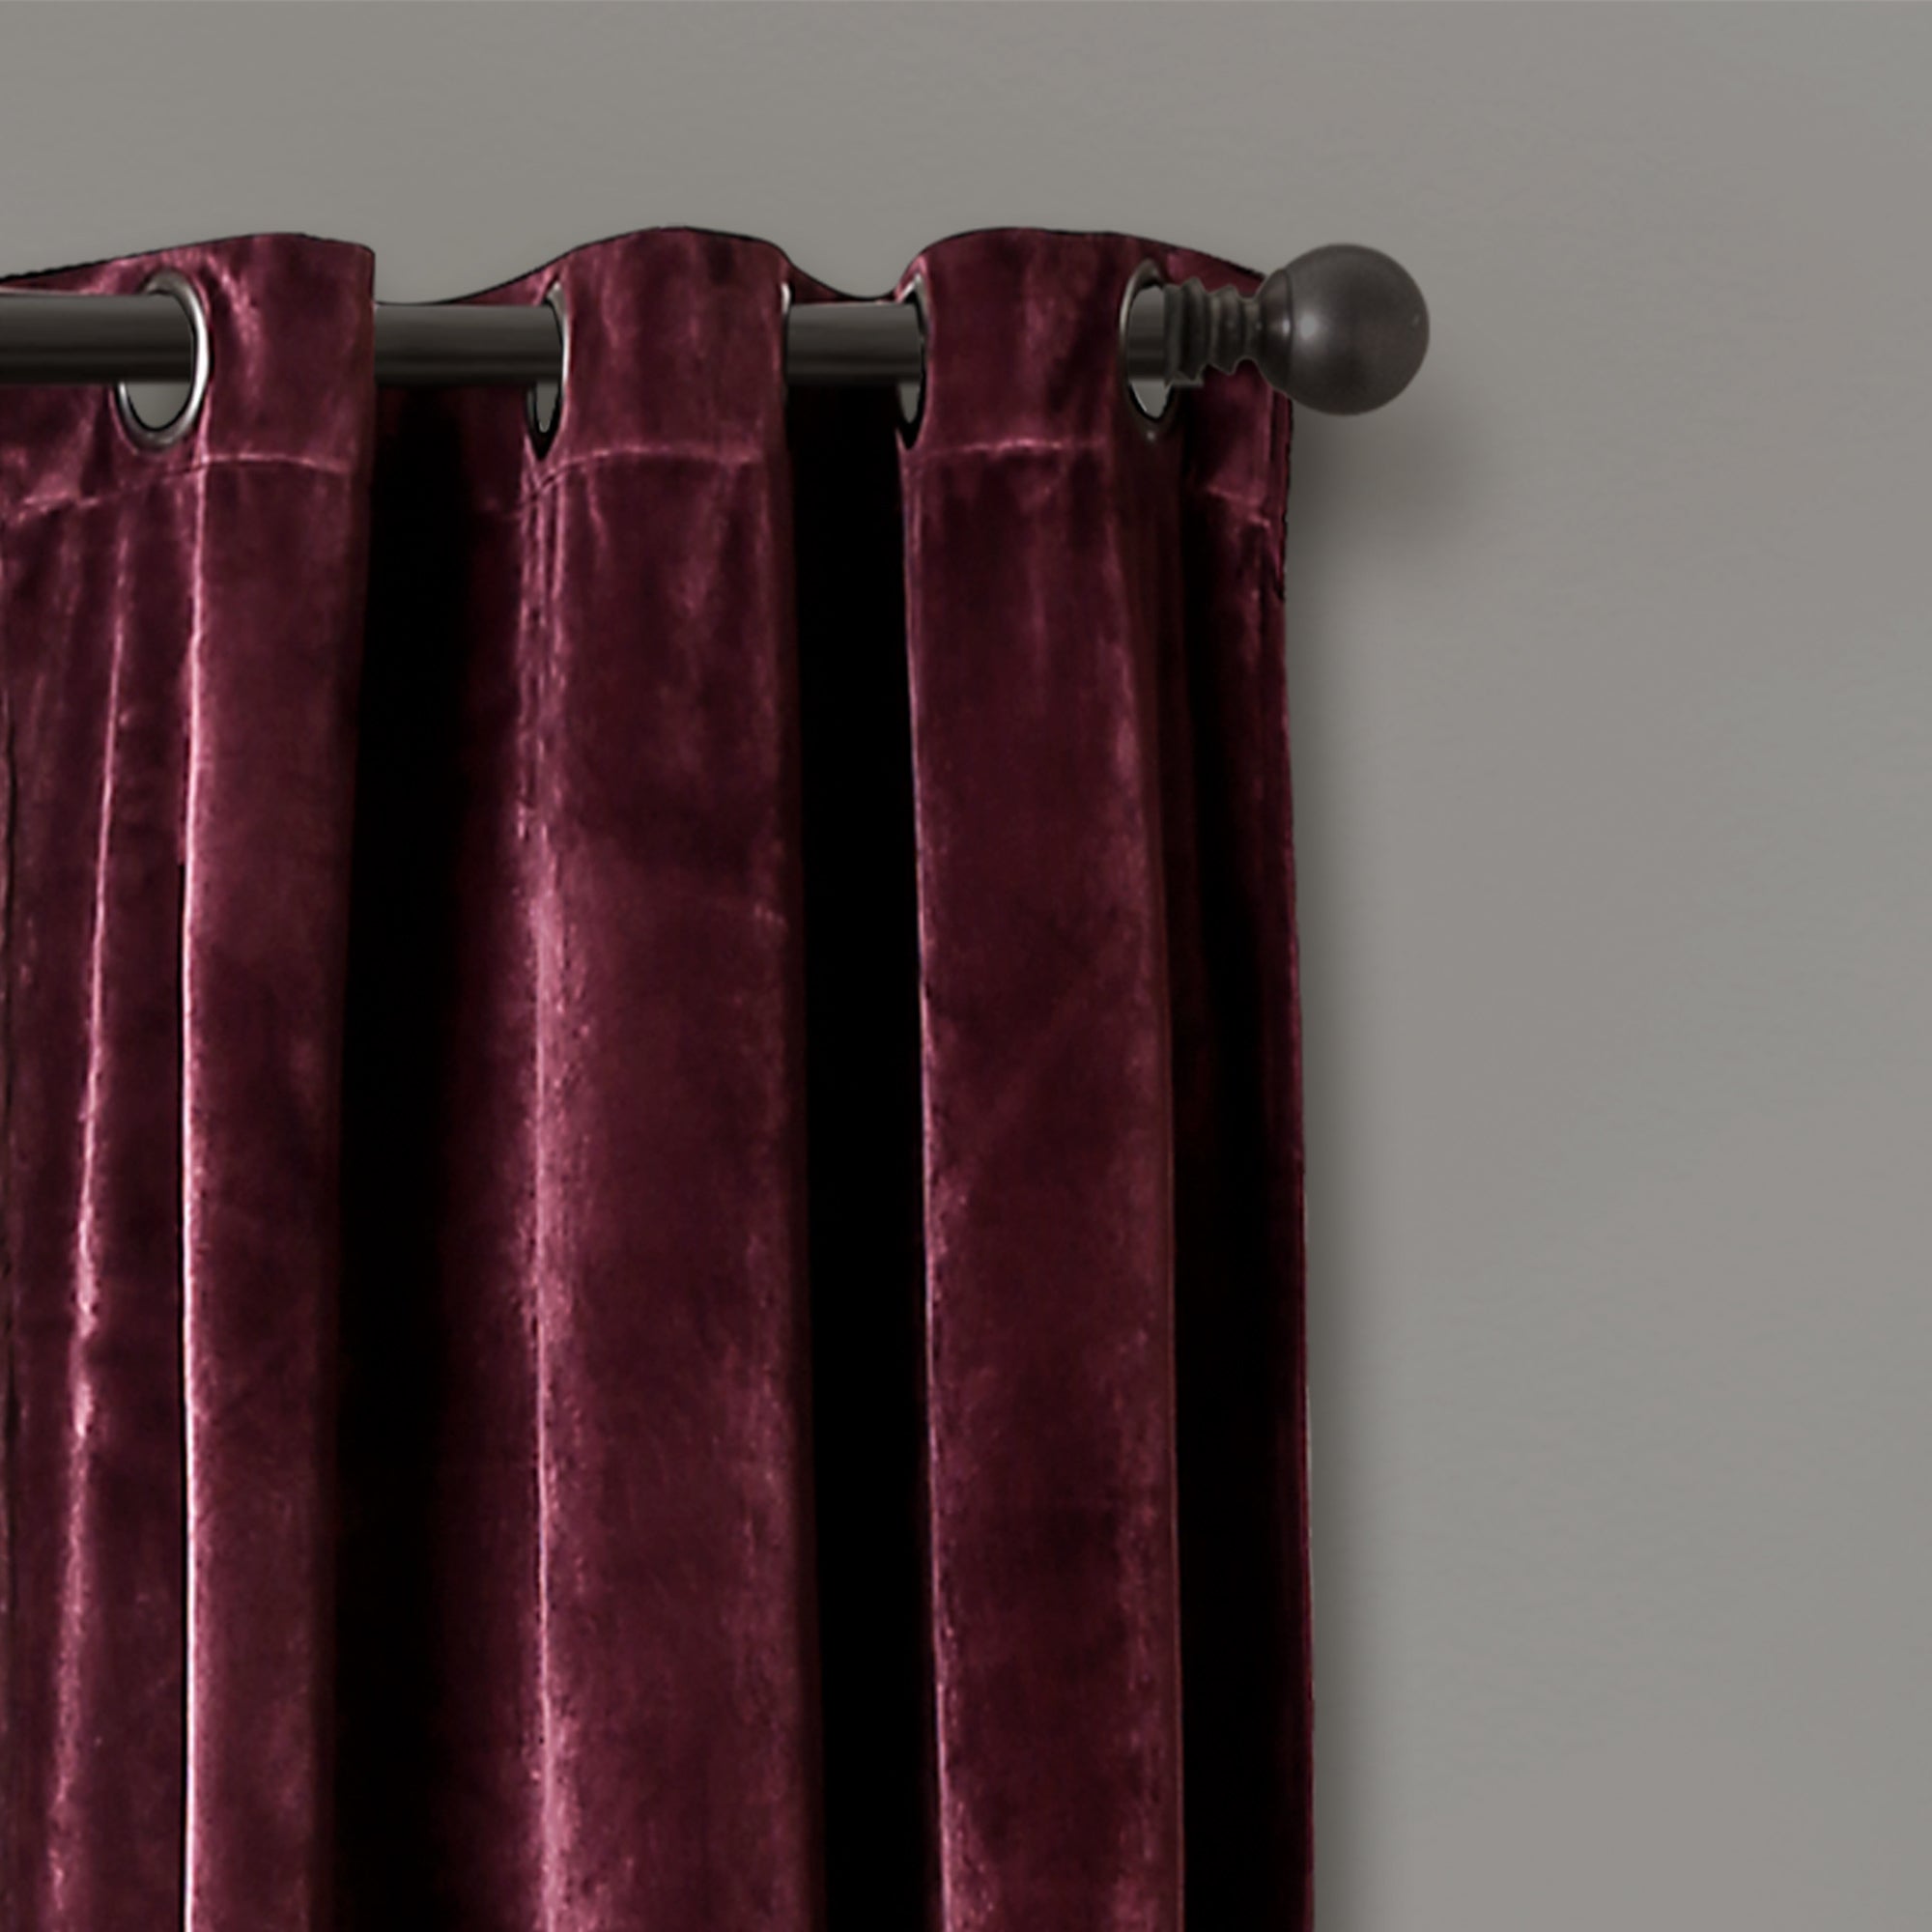 Pair of Velvet Curtains in Red.